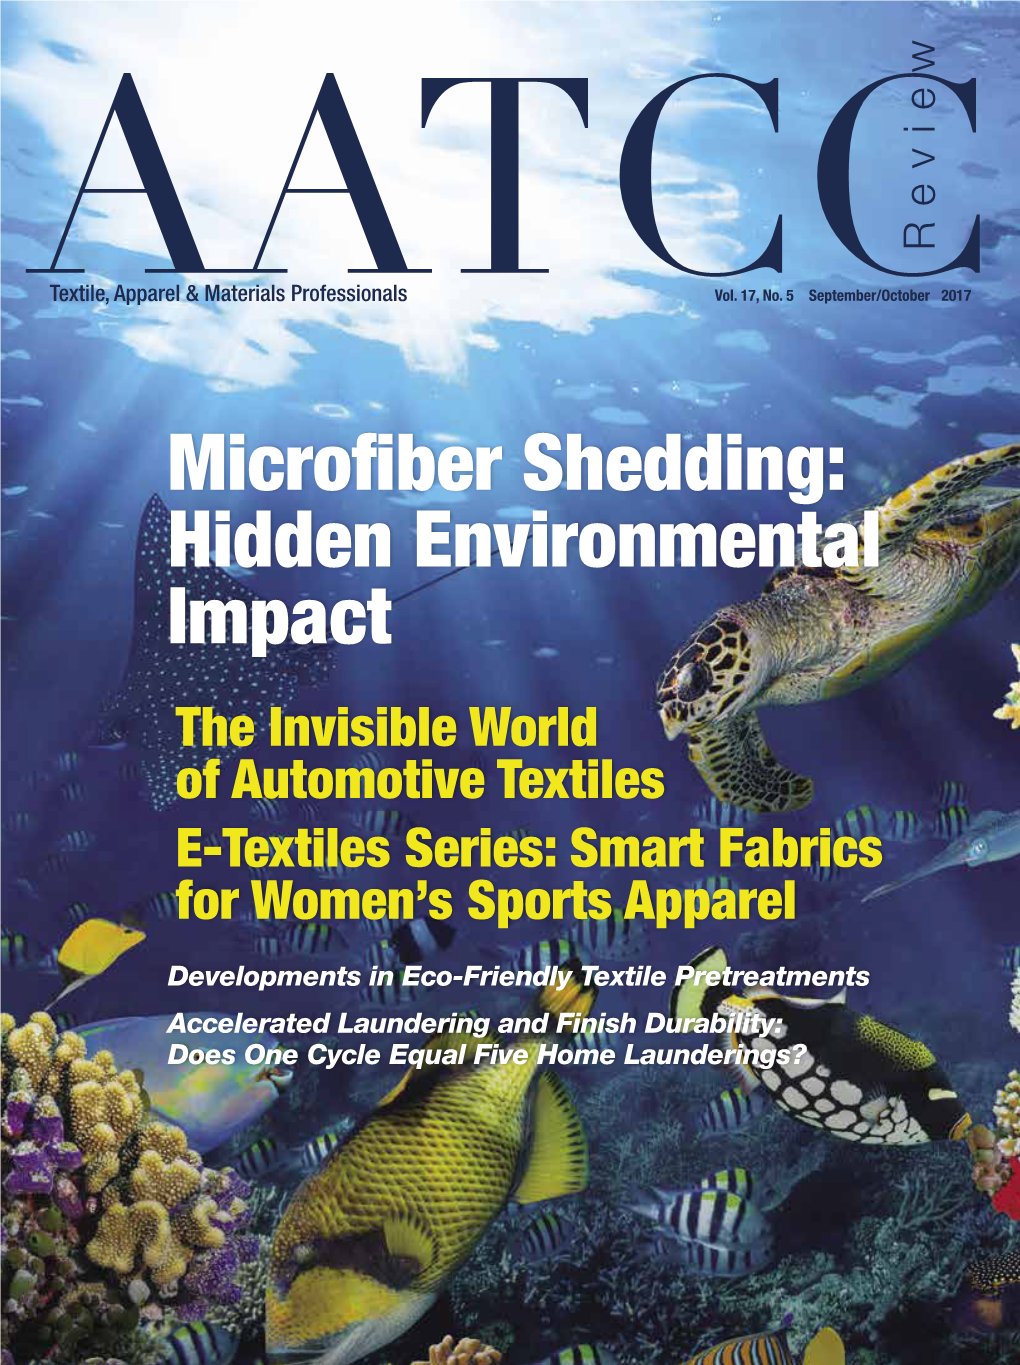 Microfiber Shedding: Hidden Environmental Impact the Invisible World of Automotive Textiles E-Textiles Series: Smart Fabrics for Women’S Sports Apparel